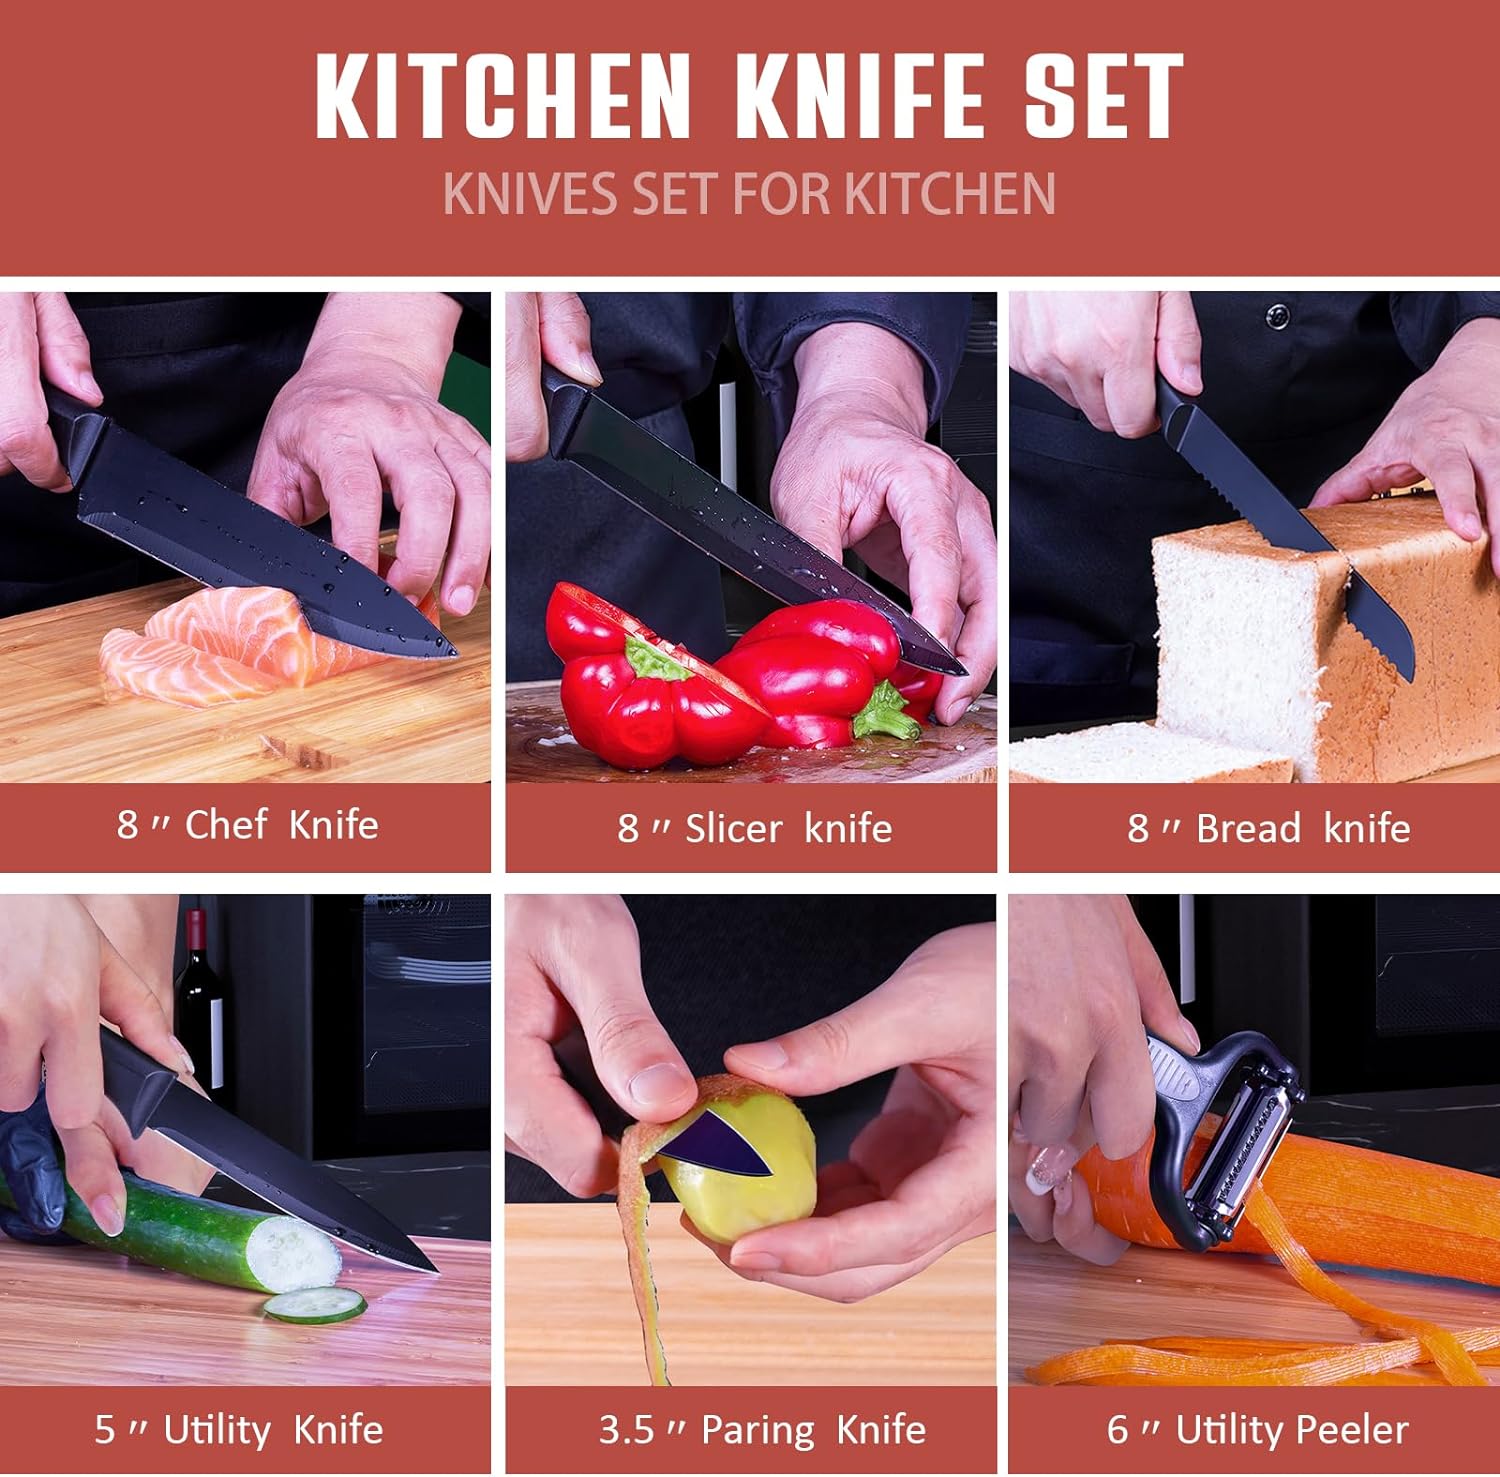 Deik Knife Set 6 Piece, Black Chef Knives with Sharp Blades Nonstick Coating Easy Grip Handle